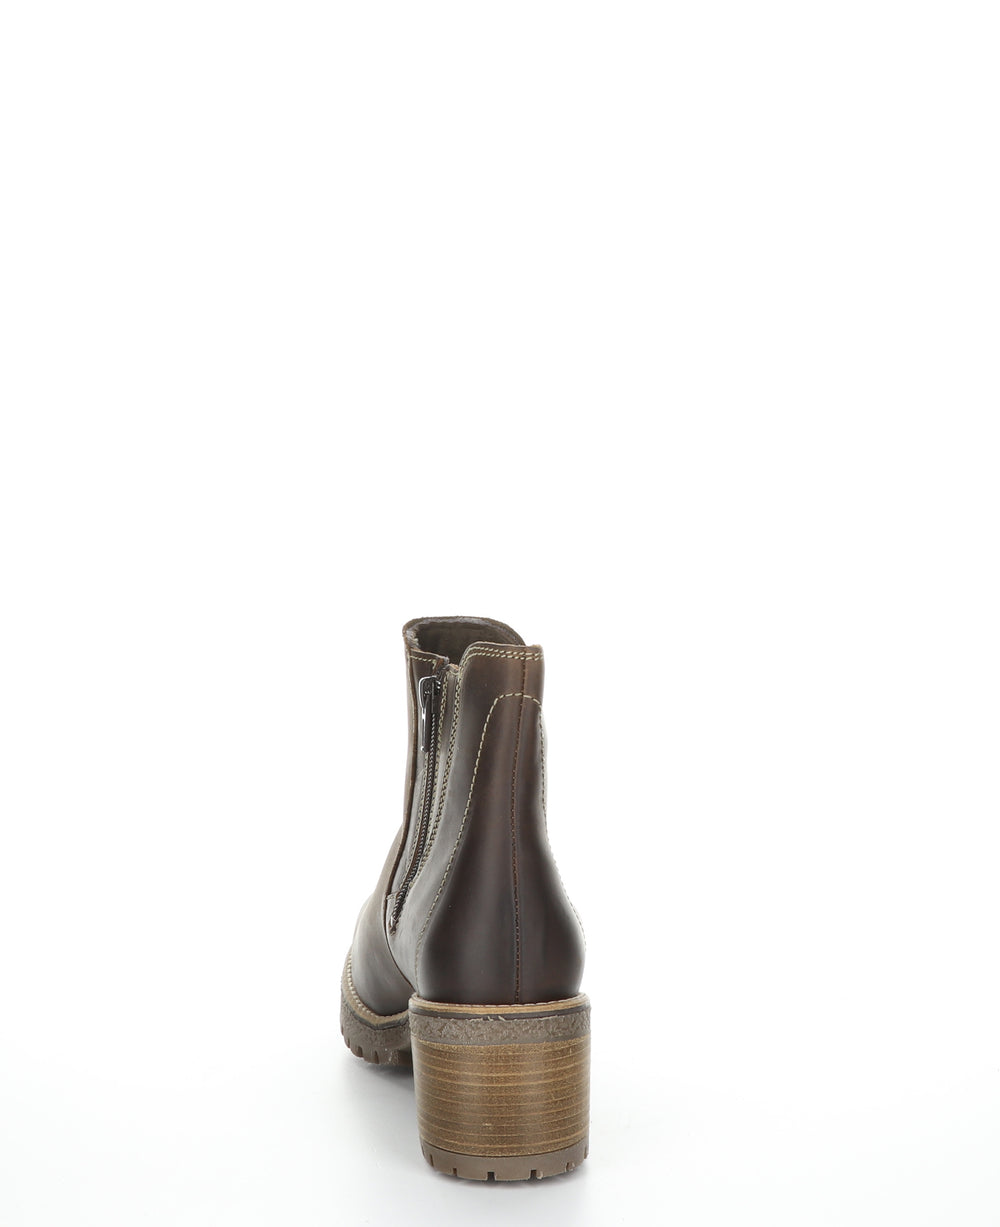 MASS Espresso/Dk Brn Zip Up Ankle Boots